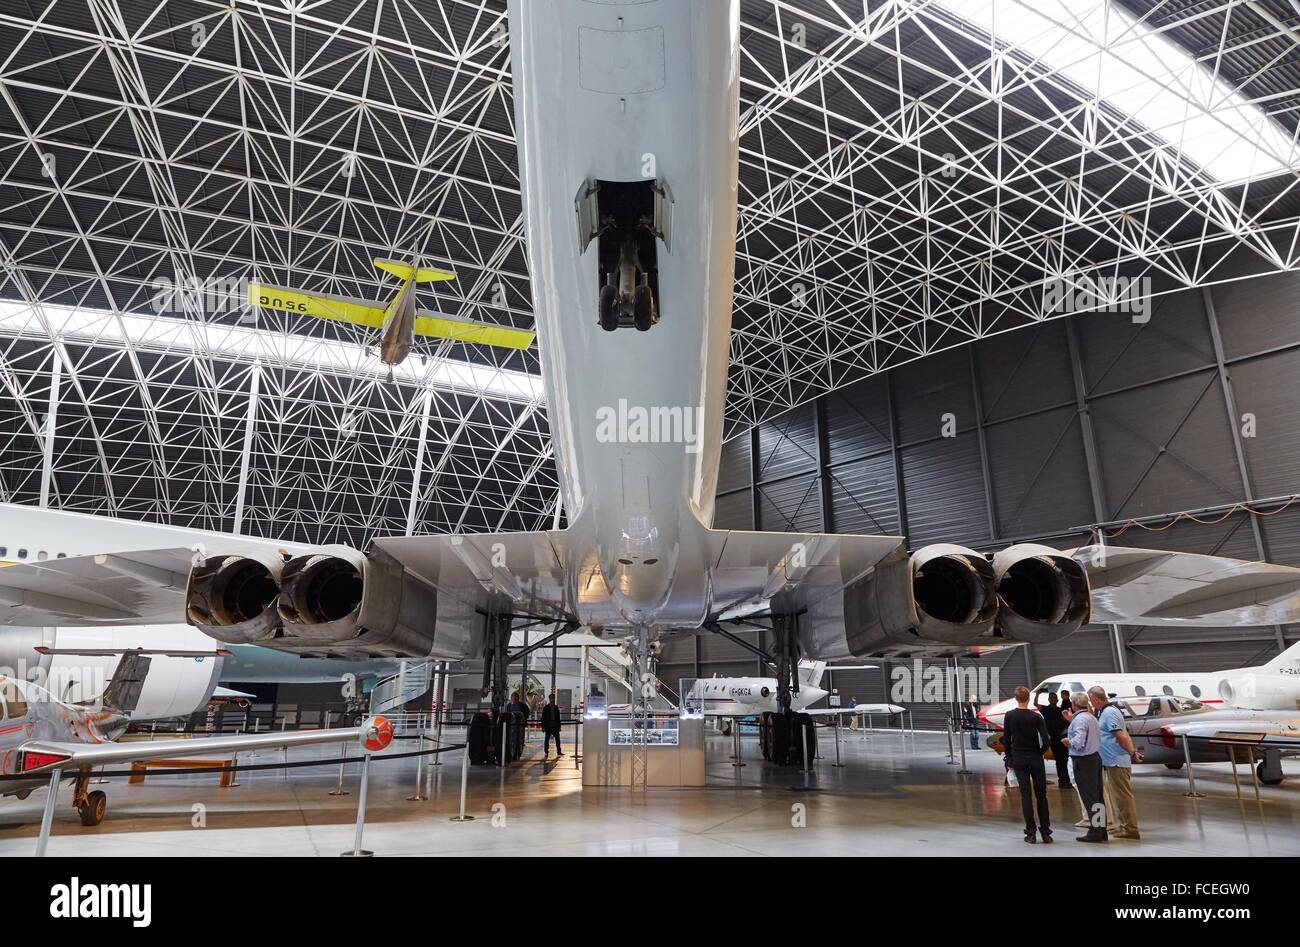 Concorde aircraft. Aeroscopia. Aeronautical Museum. Toulouse. Haute Garonne. France. Stock Photo